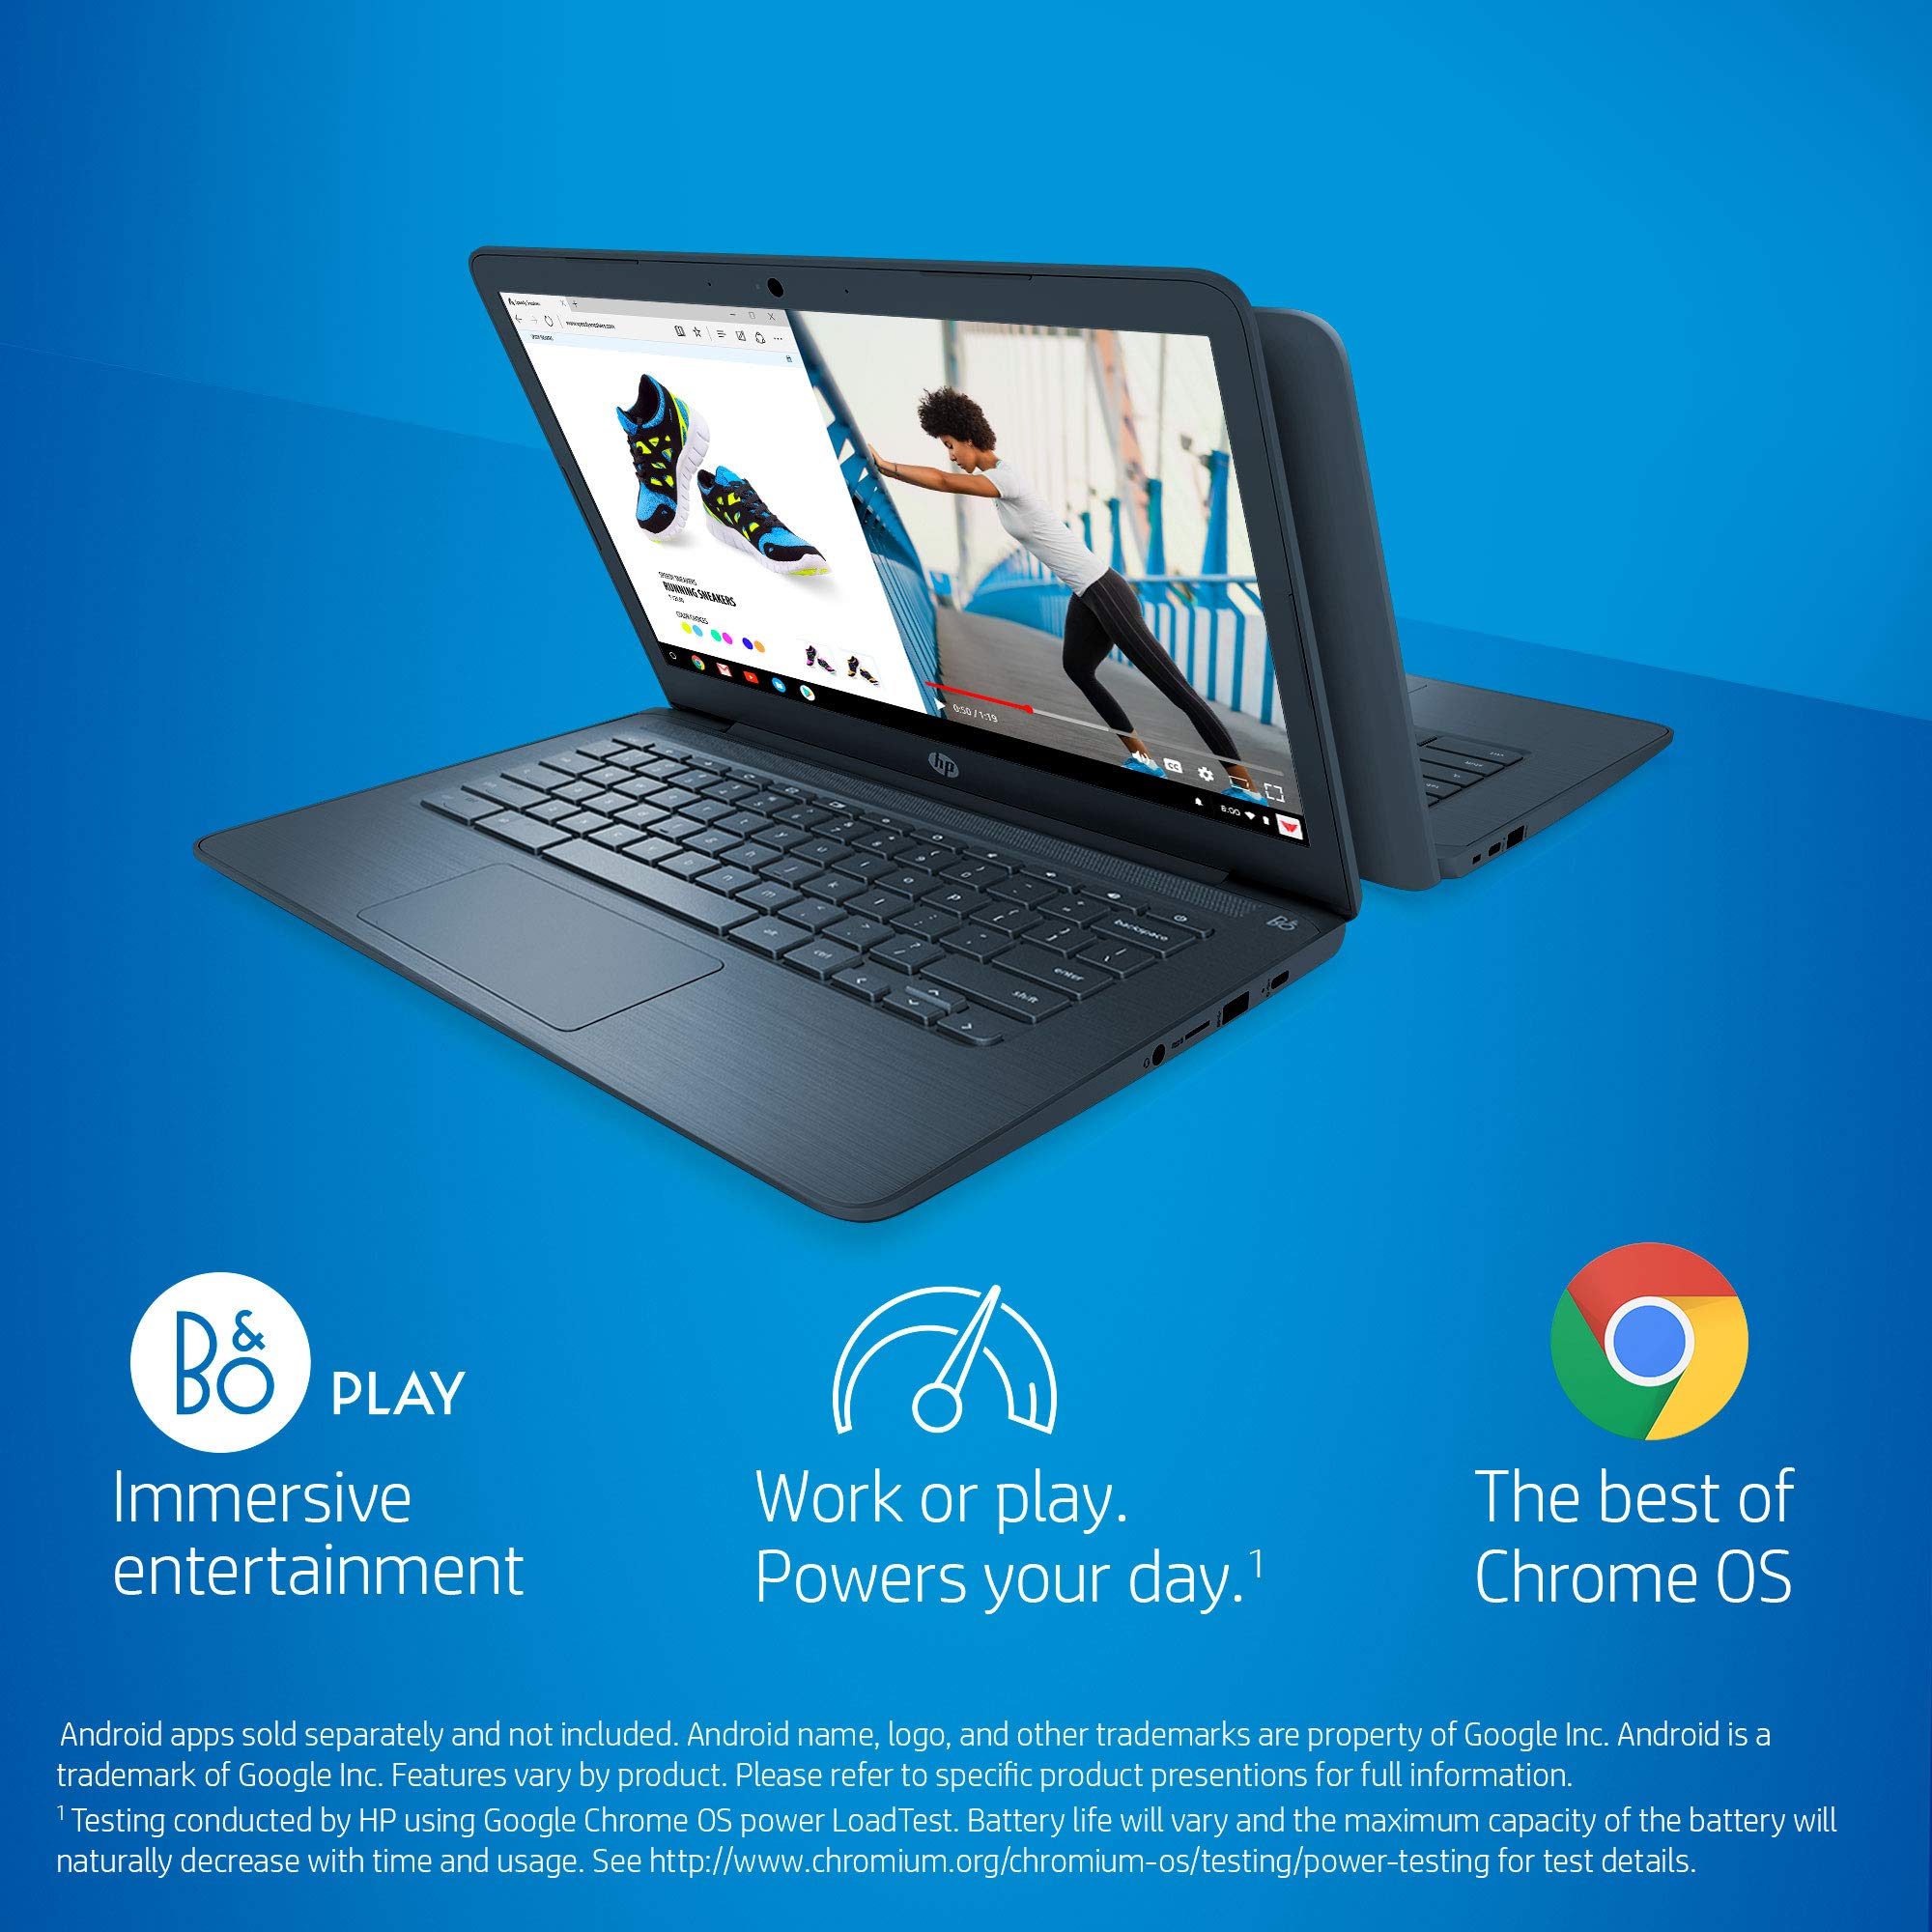 HP Chromebook 14-inch-Laptop-with 180-Degree-Hinge, Full HD Screen, AMD Dual-Core A4-9120-Processor, 4 GB SDRAM, 32 GB eMMC Storage, Chrome OS (14-db0080nr, Ink Blue)